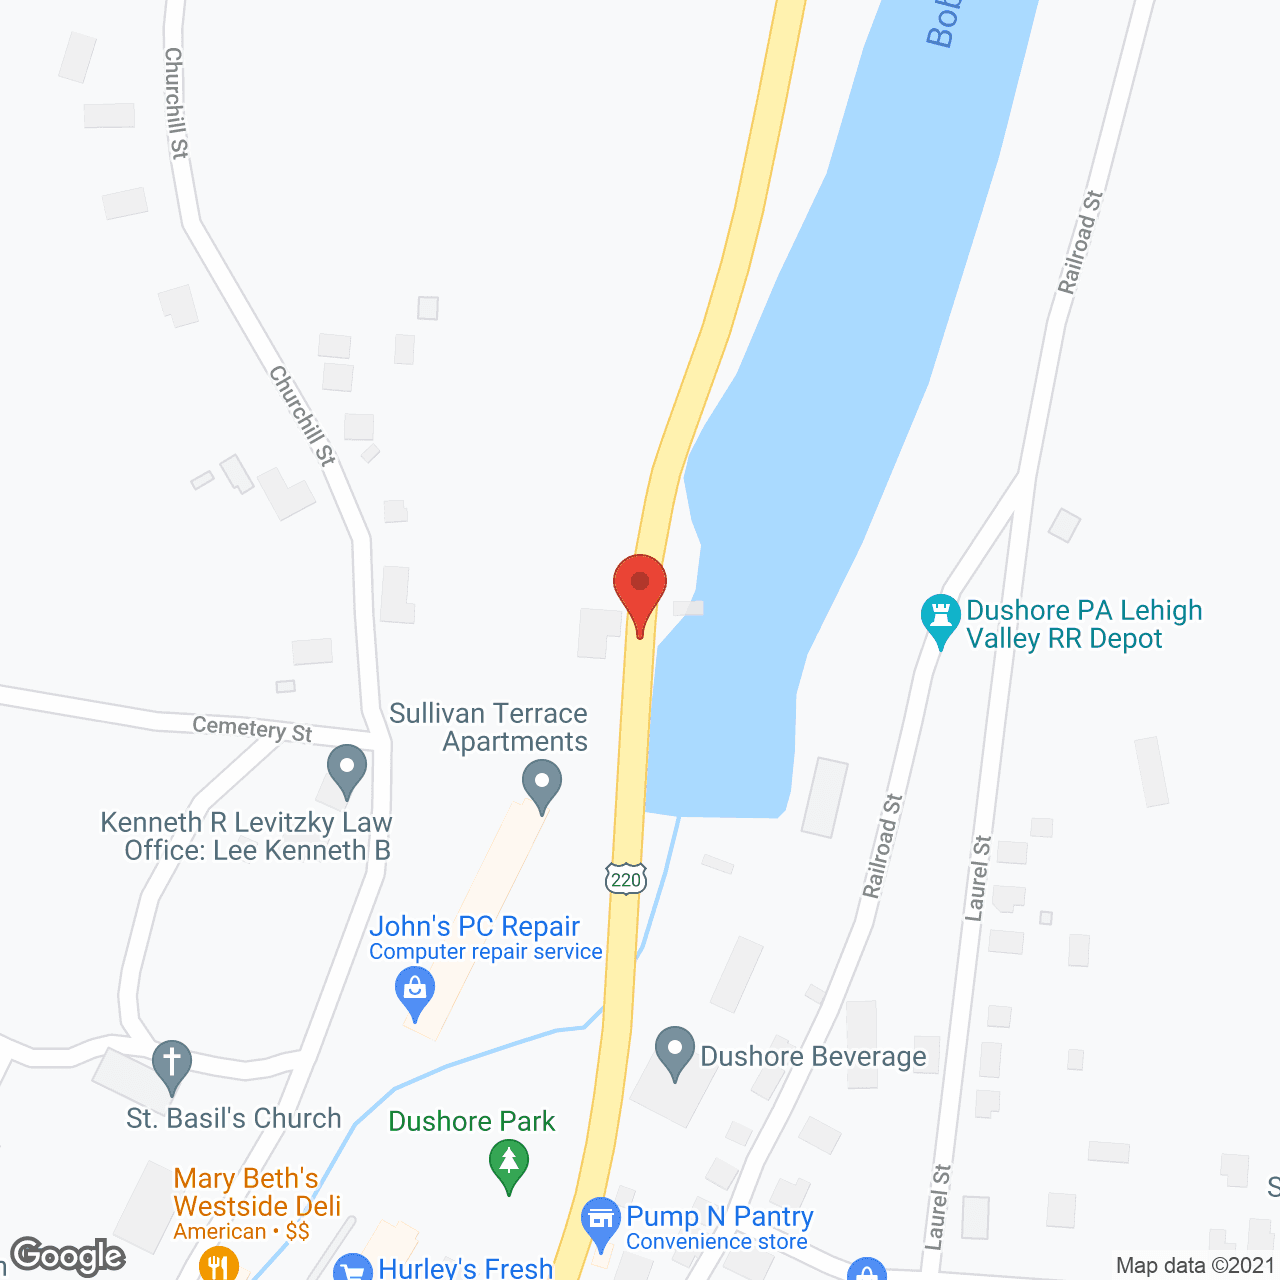 Sullivan Terrace in google map